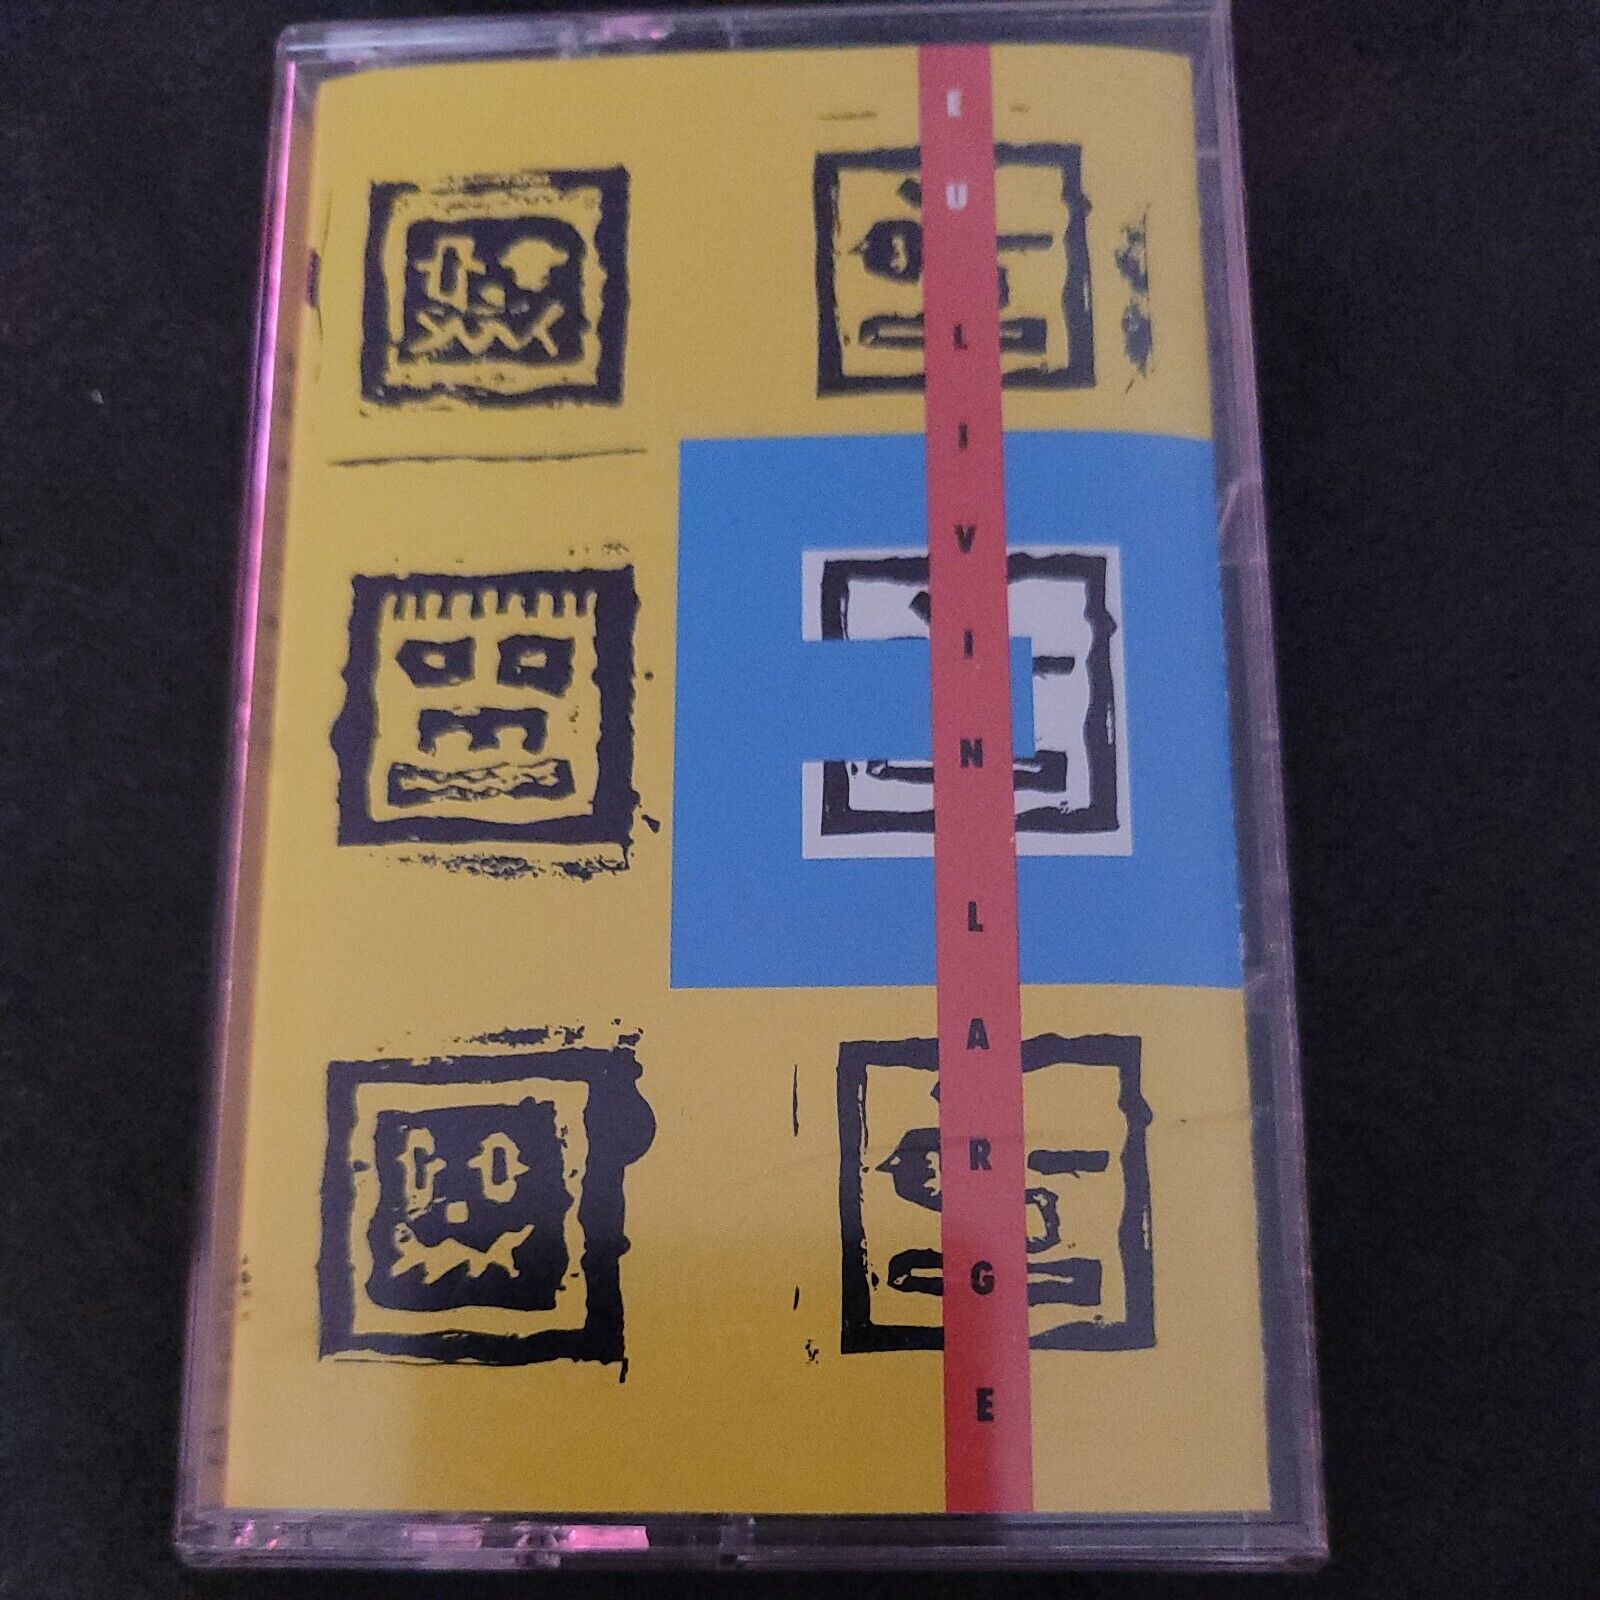 1989 EU Livin\' Large R&B Cassette